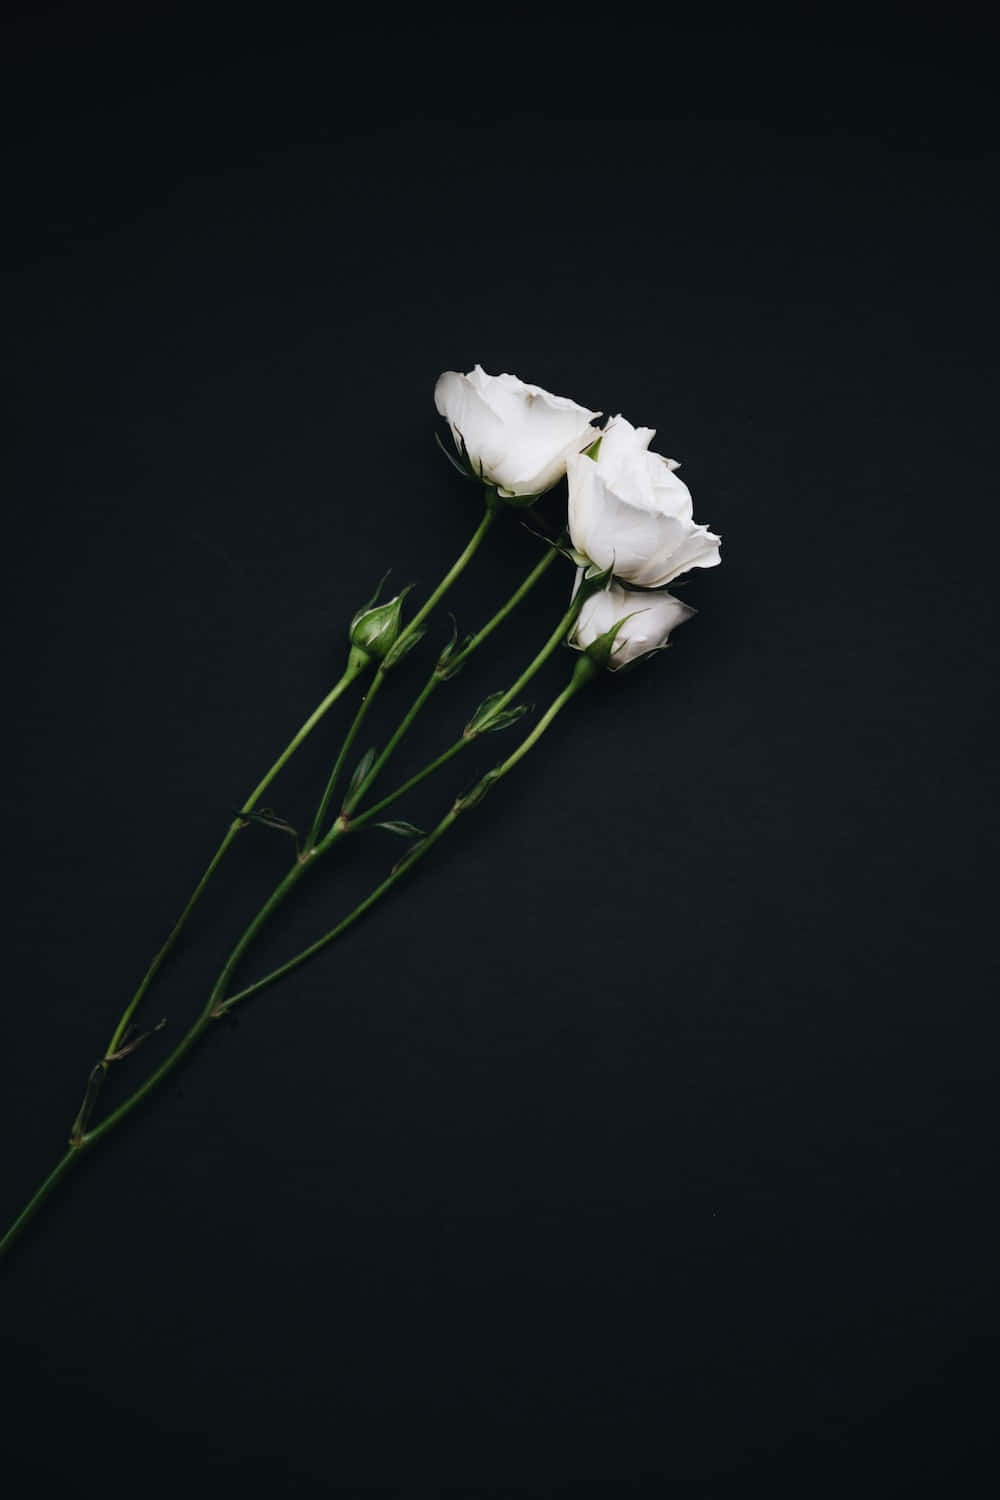 White Roses Iphone Wallpaper